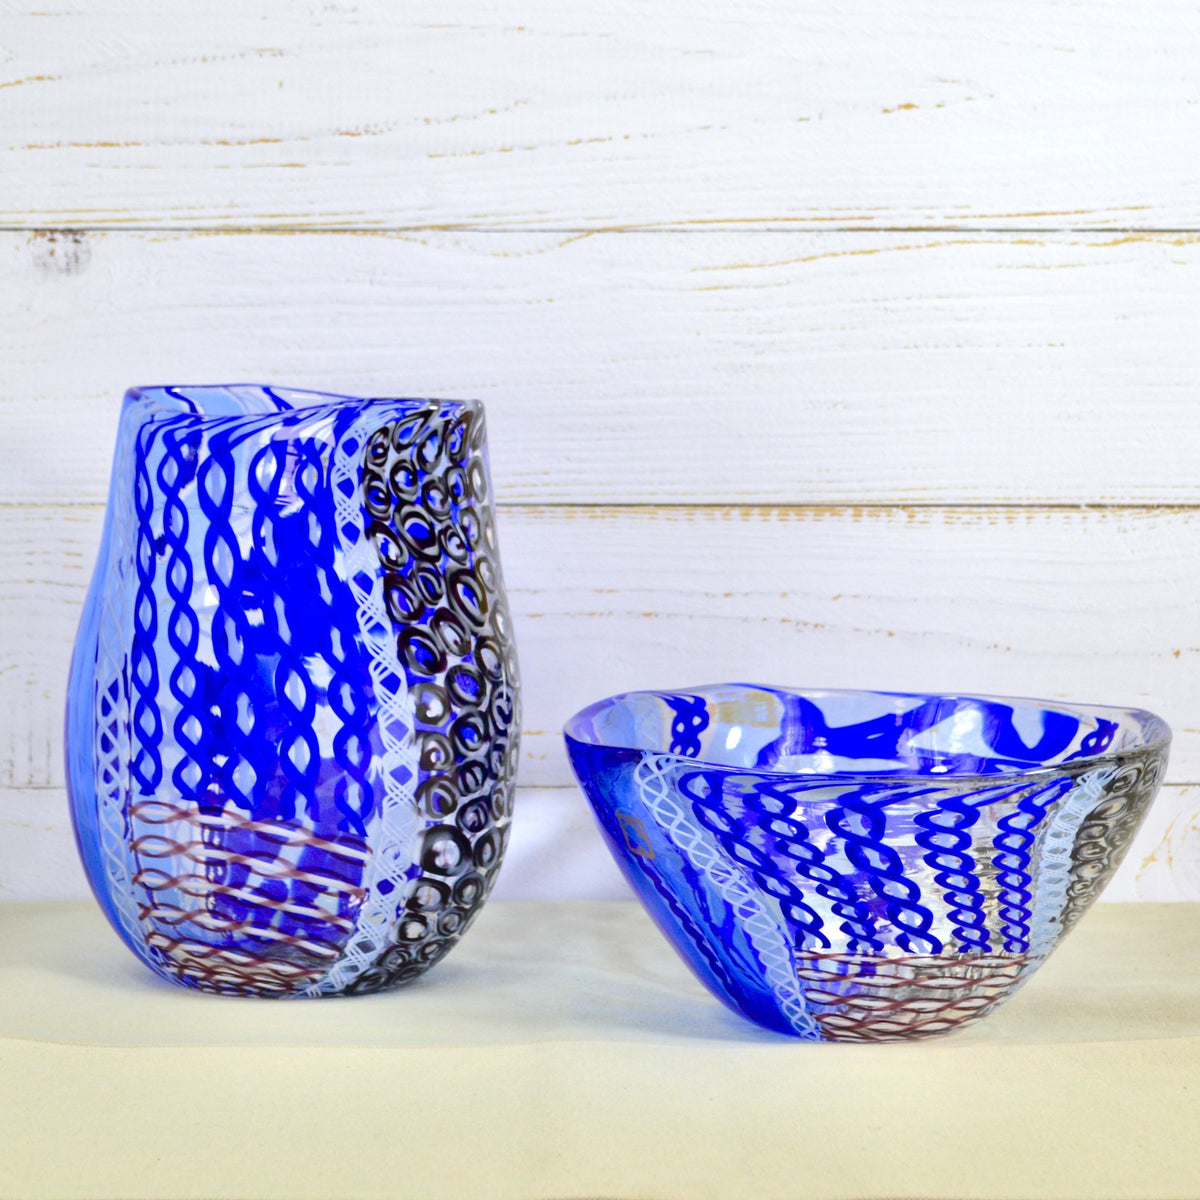 Murano Glass Large Art Centerpiece Bowl, Blue - My Italian Decor